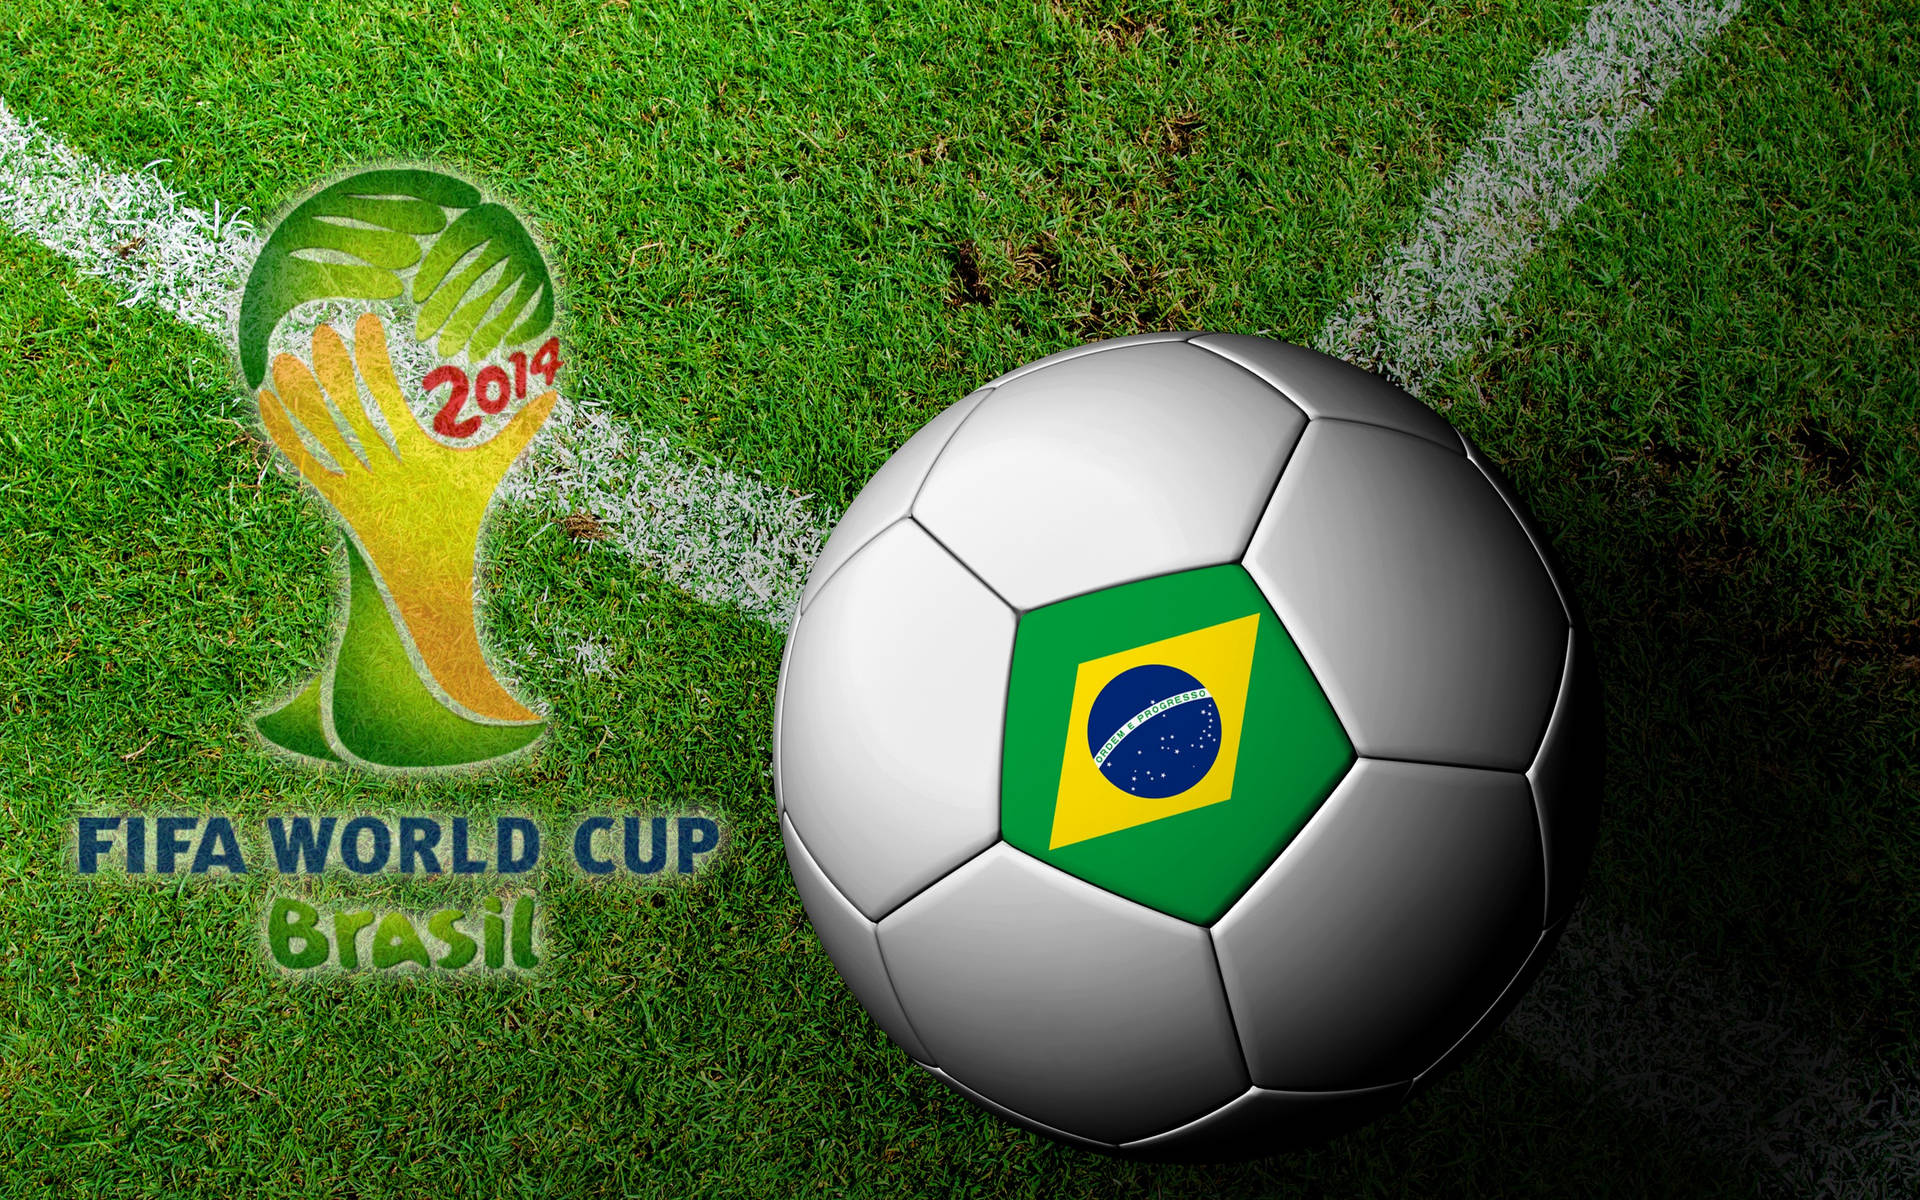 Fifa World Cup Brazil 2014 Football